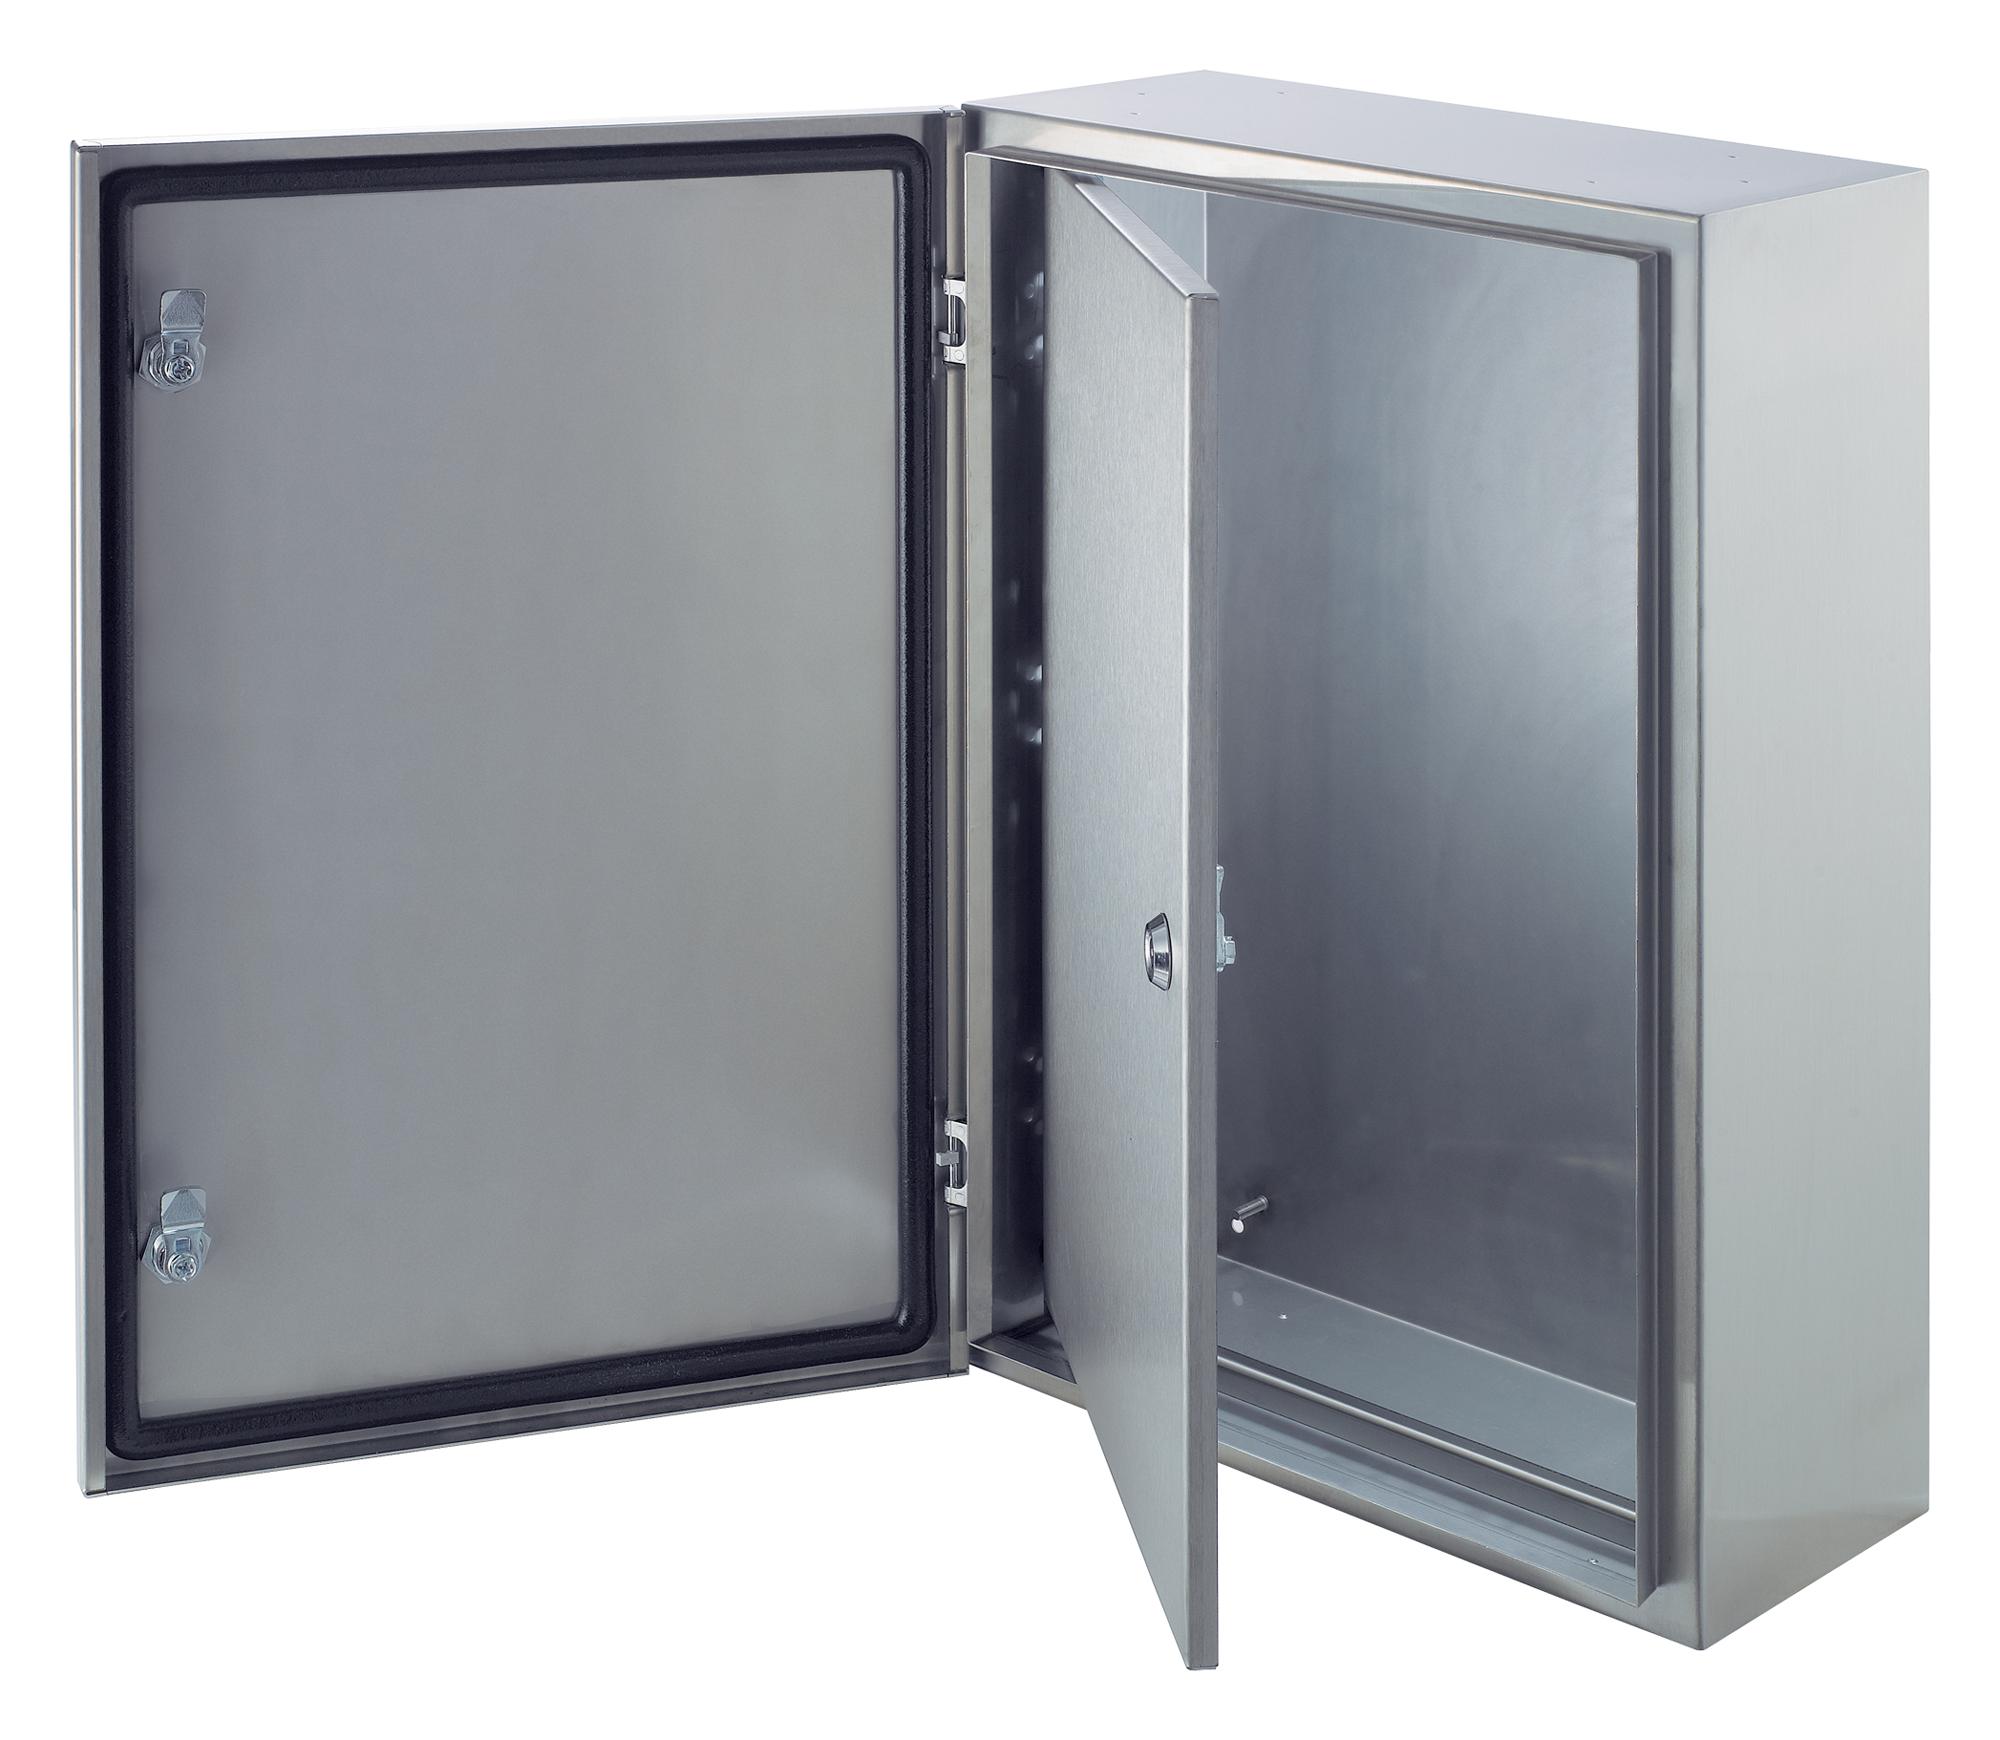 Caja de metal impermeable con ventilación para exteriores